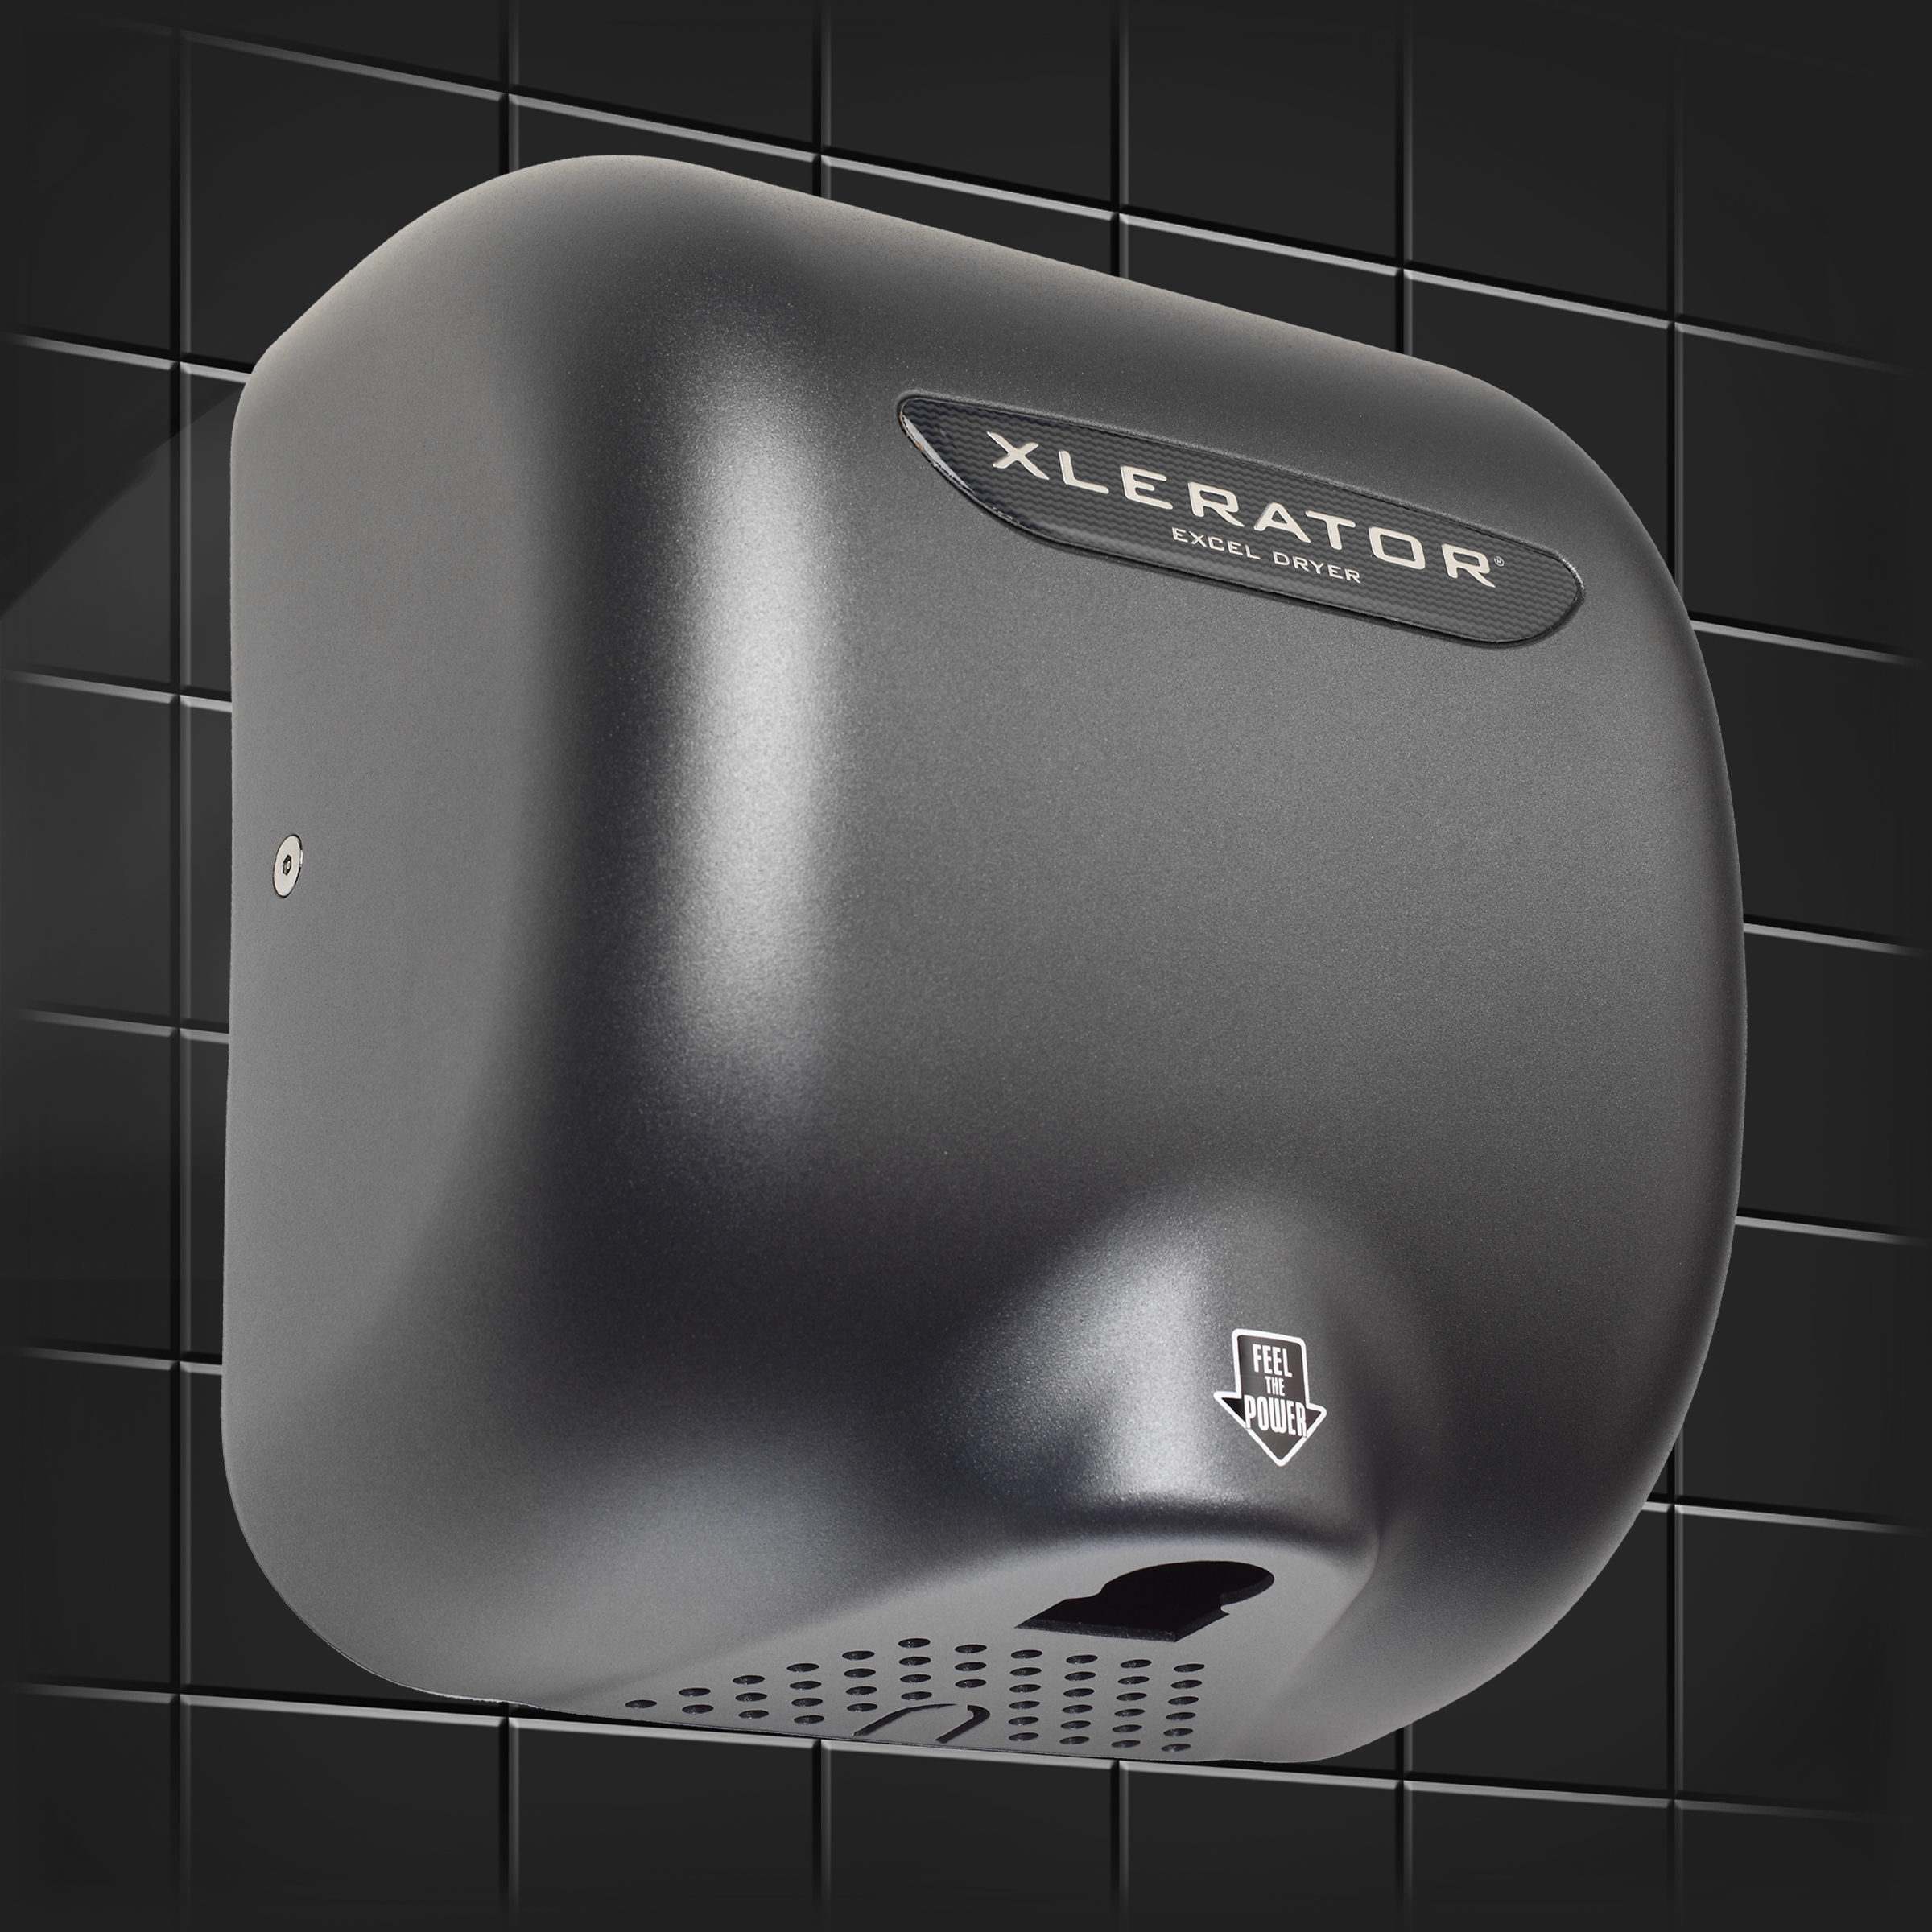 Excel Dryer XLERATOR Hand Dryer XL-GR, Zinc Die-Cast Cover - Textured Graphite, Automatic Sensor, Su